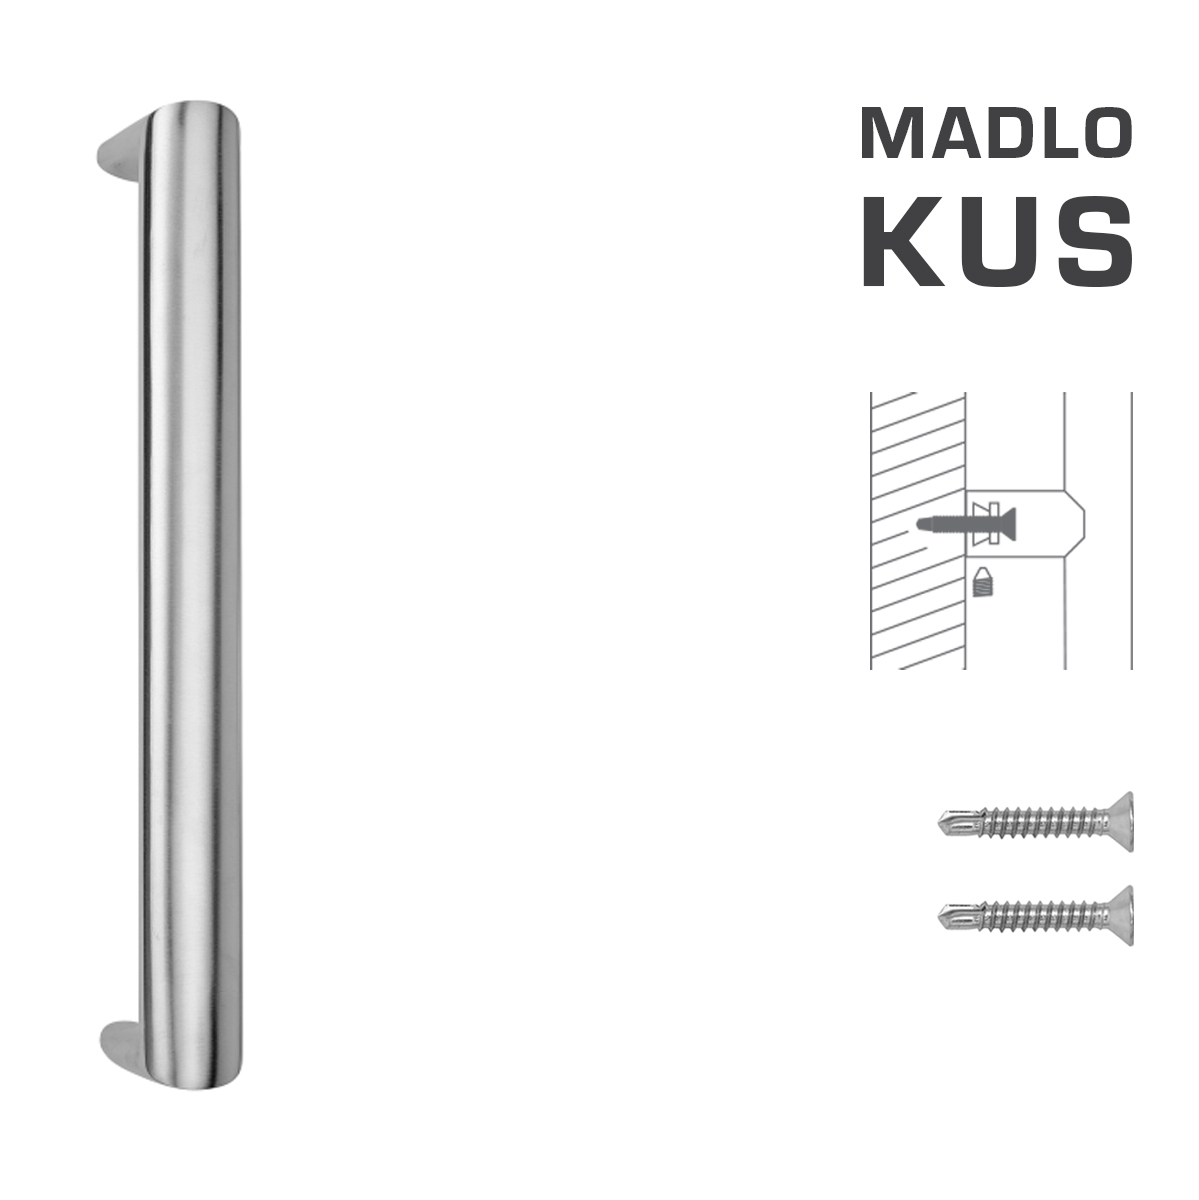 FT - MADLO kód K40 40x20 mm ST ks 800 mm, 40x20 mm, 820 mm